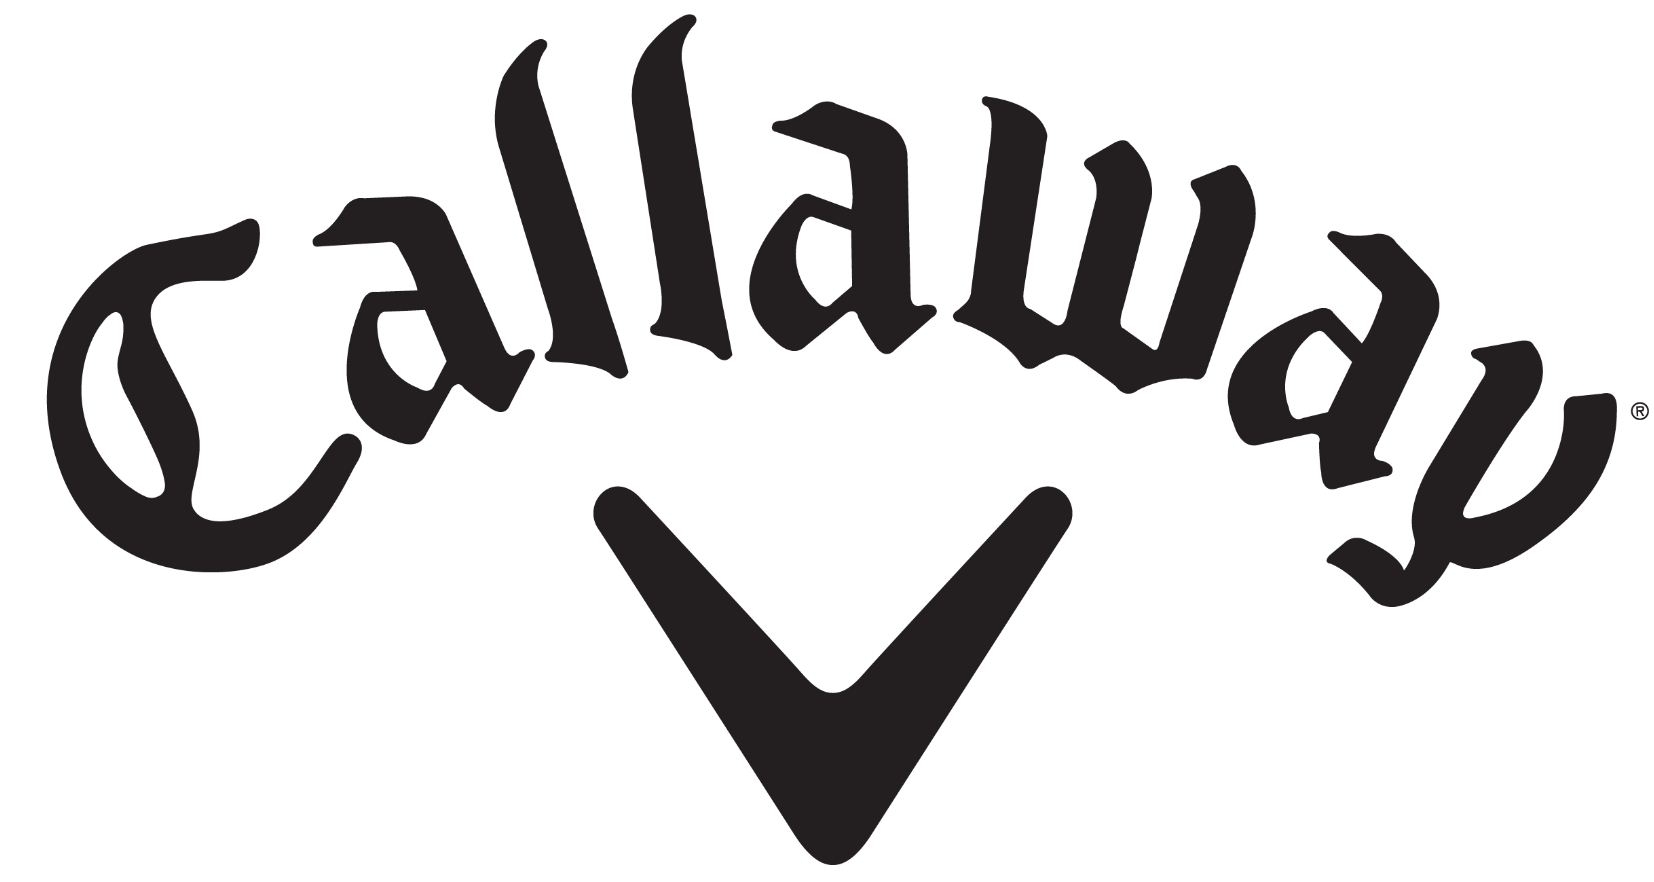 Callaway Golf Interactive logo